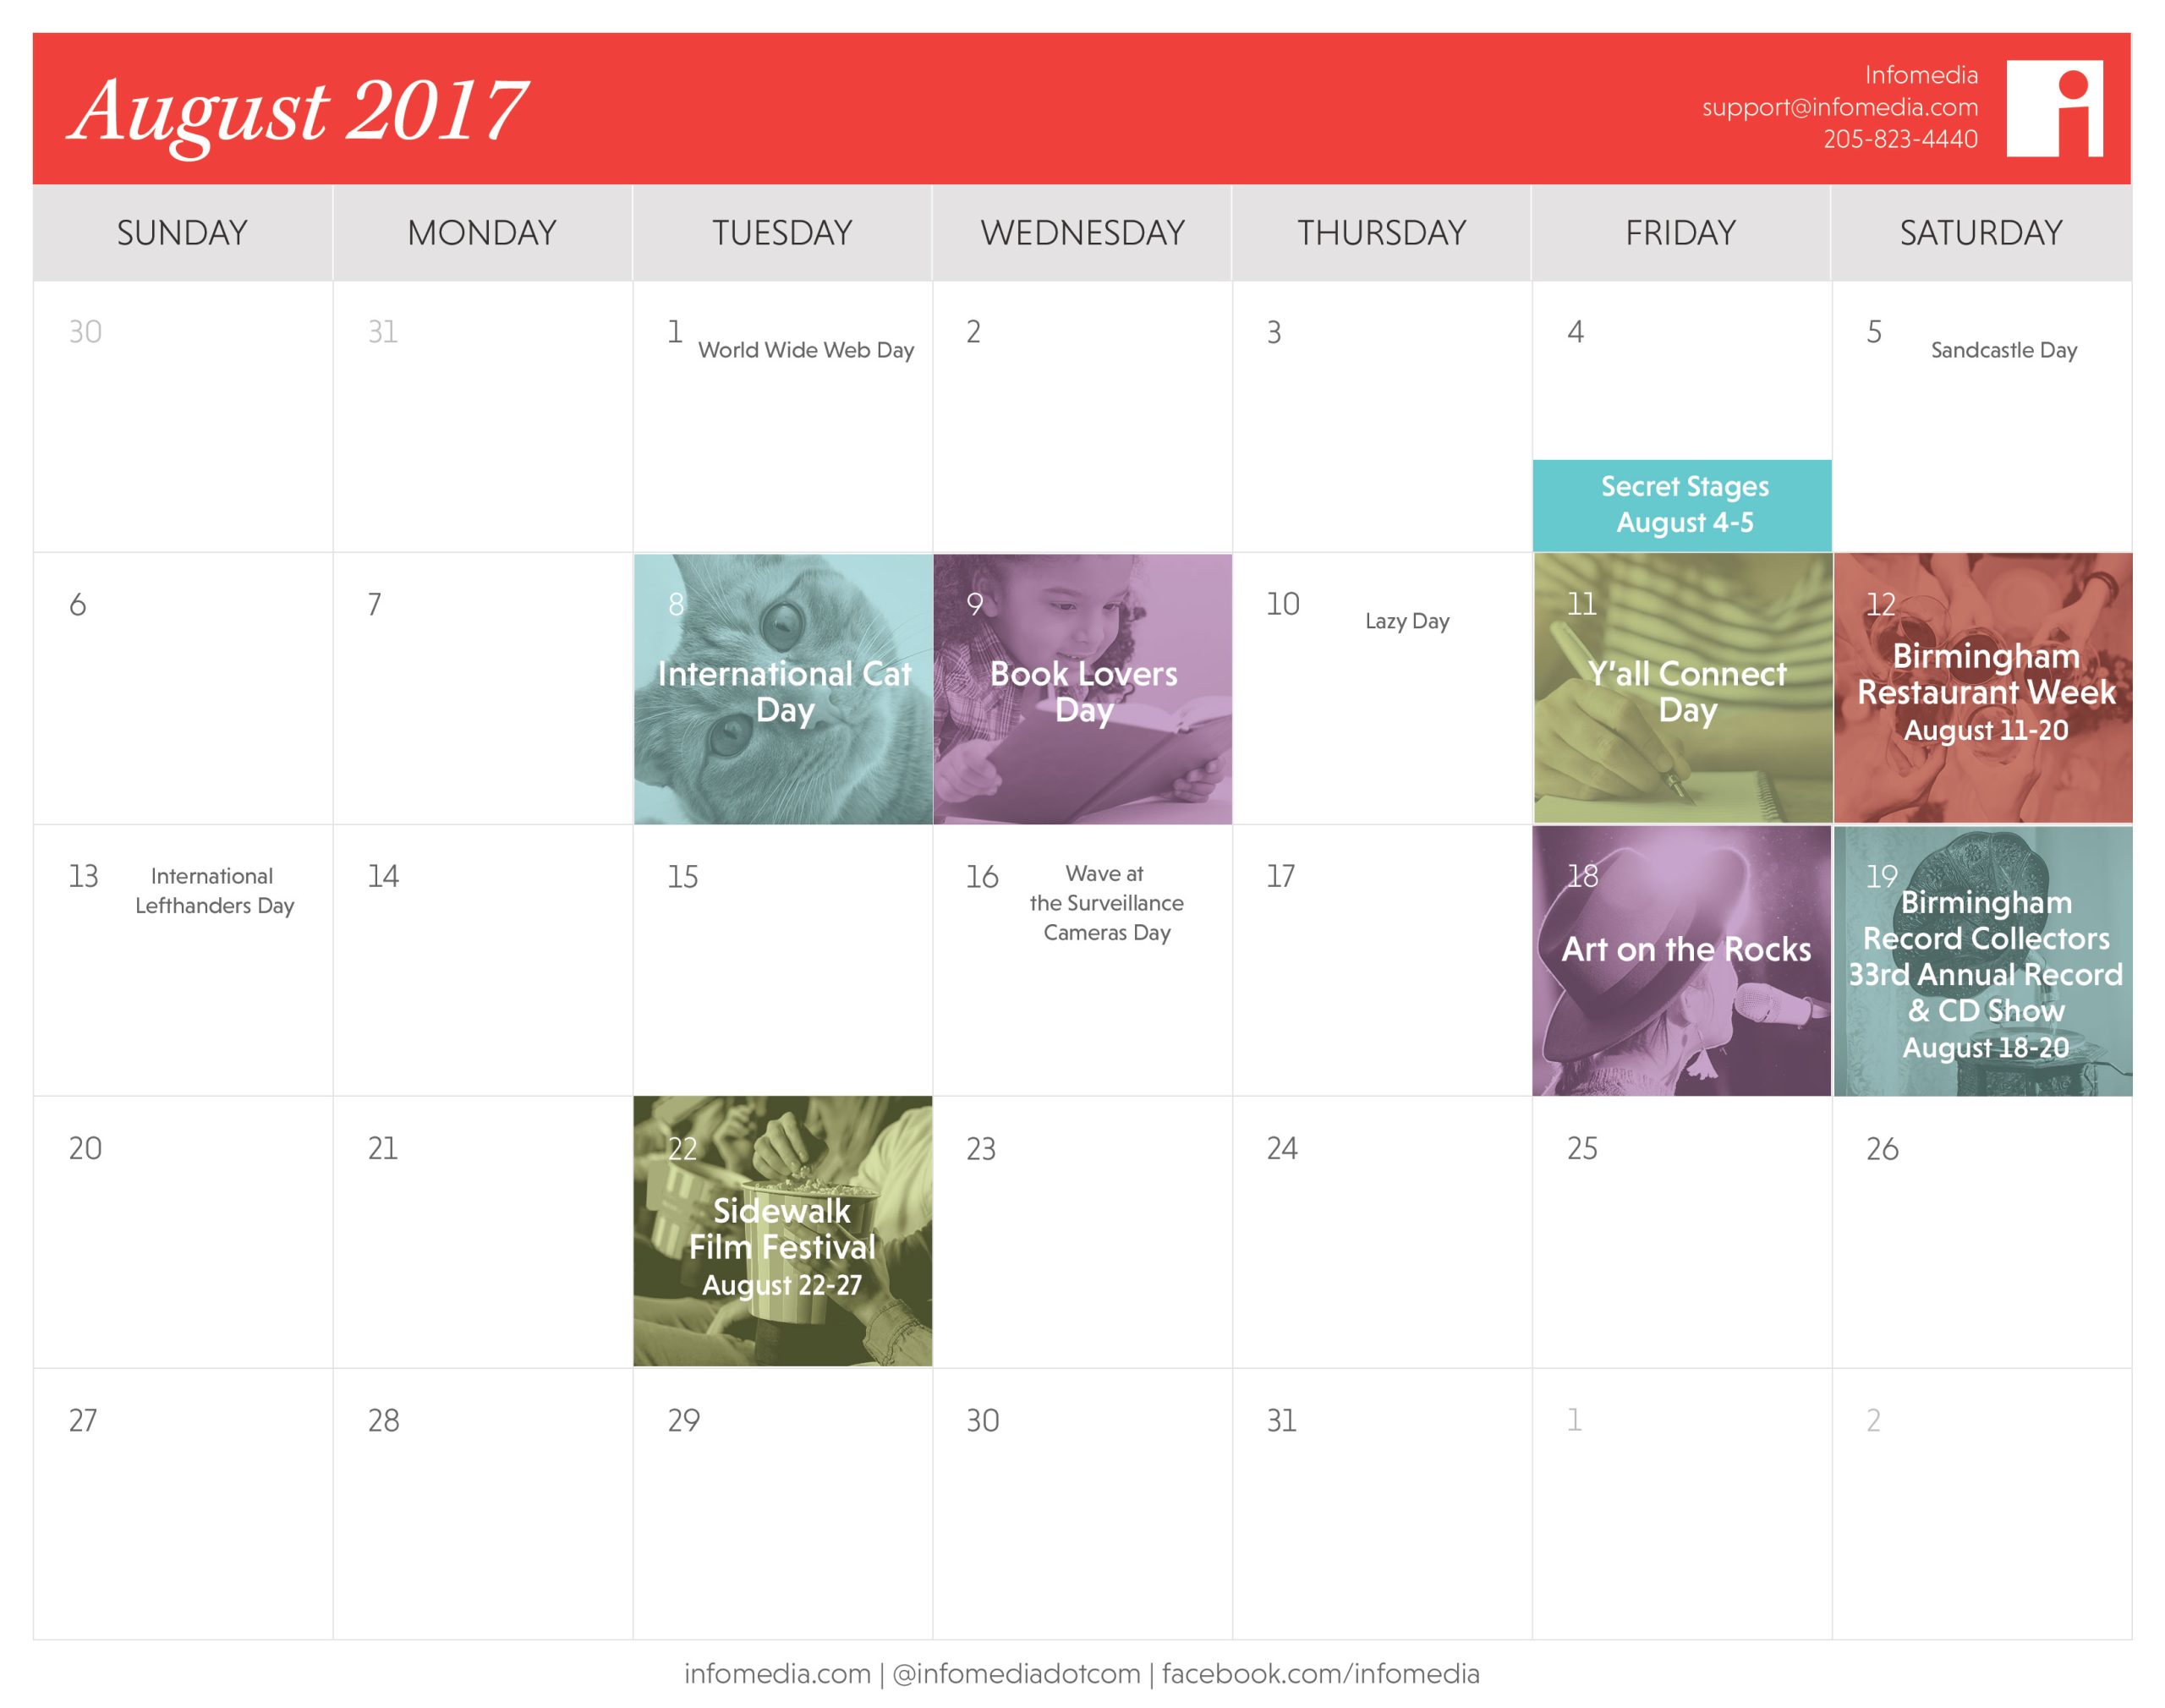 Infomedia's Event Calendar for August 2017